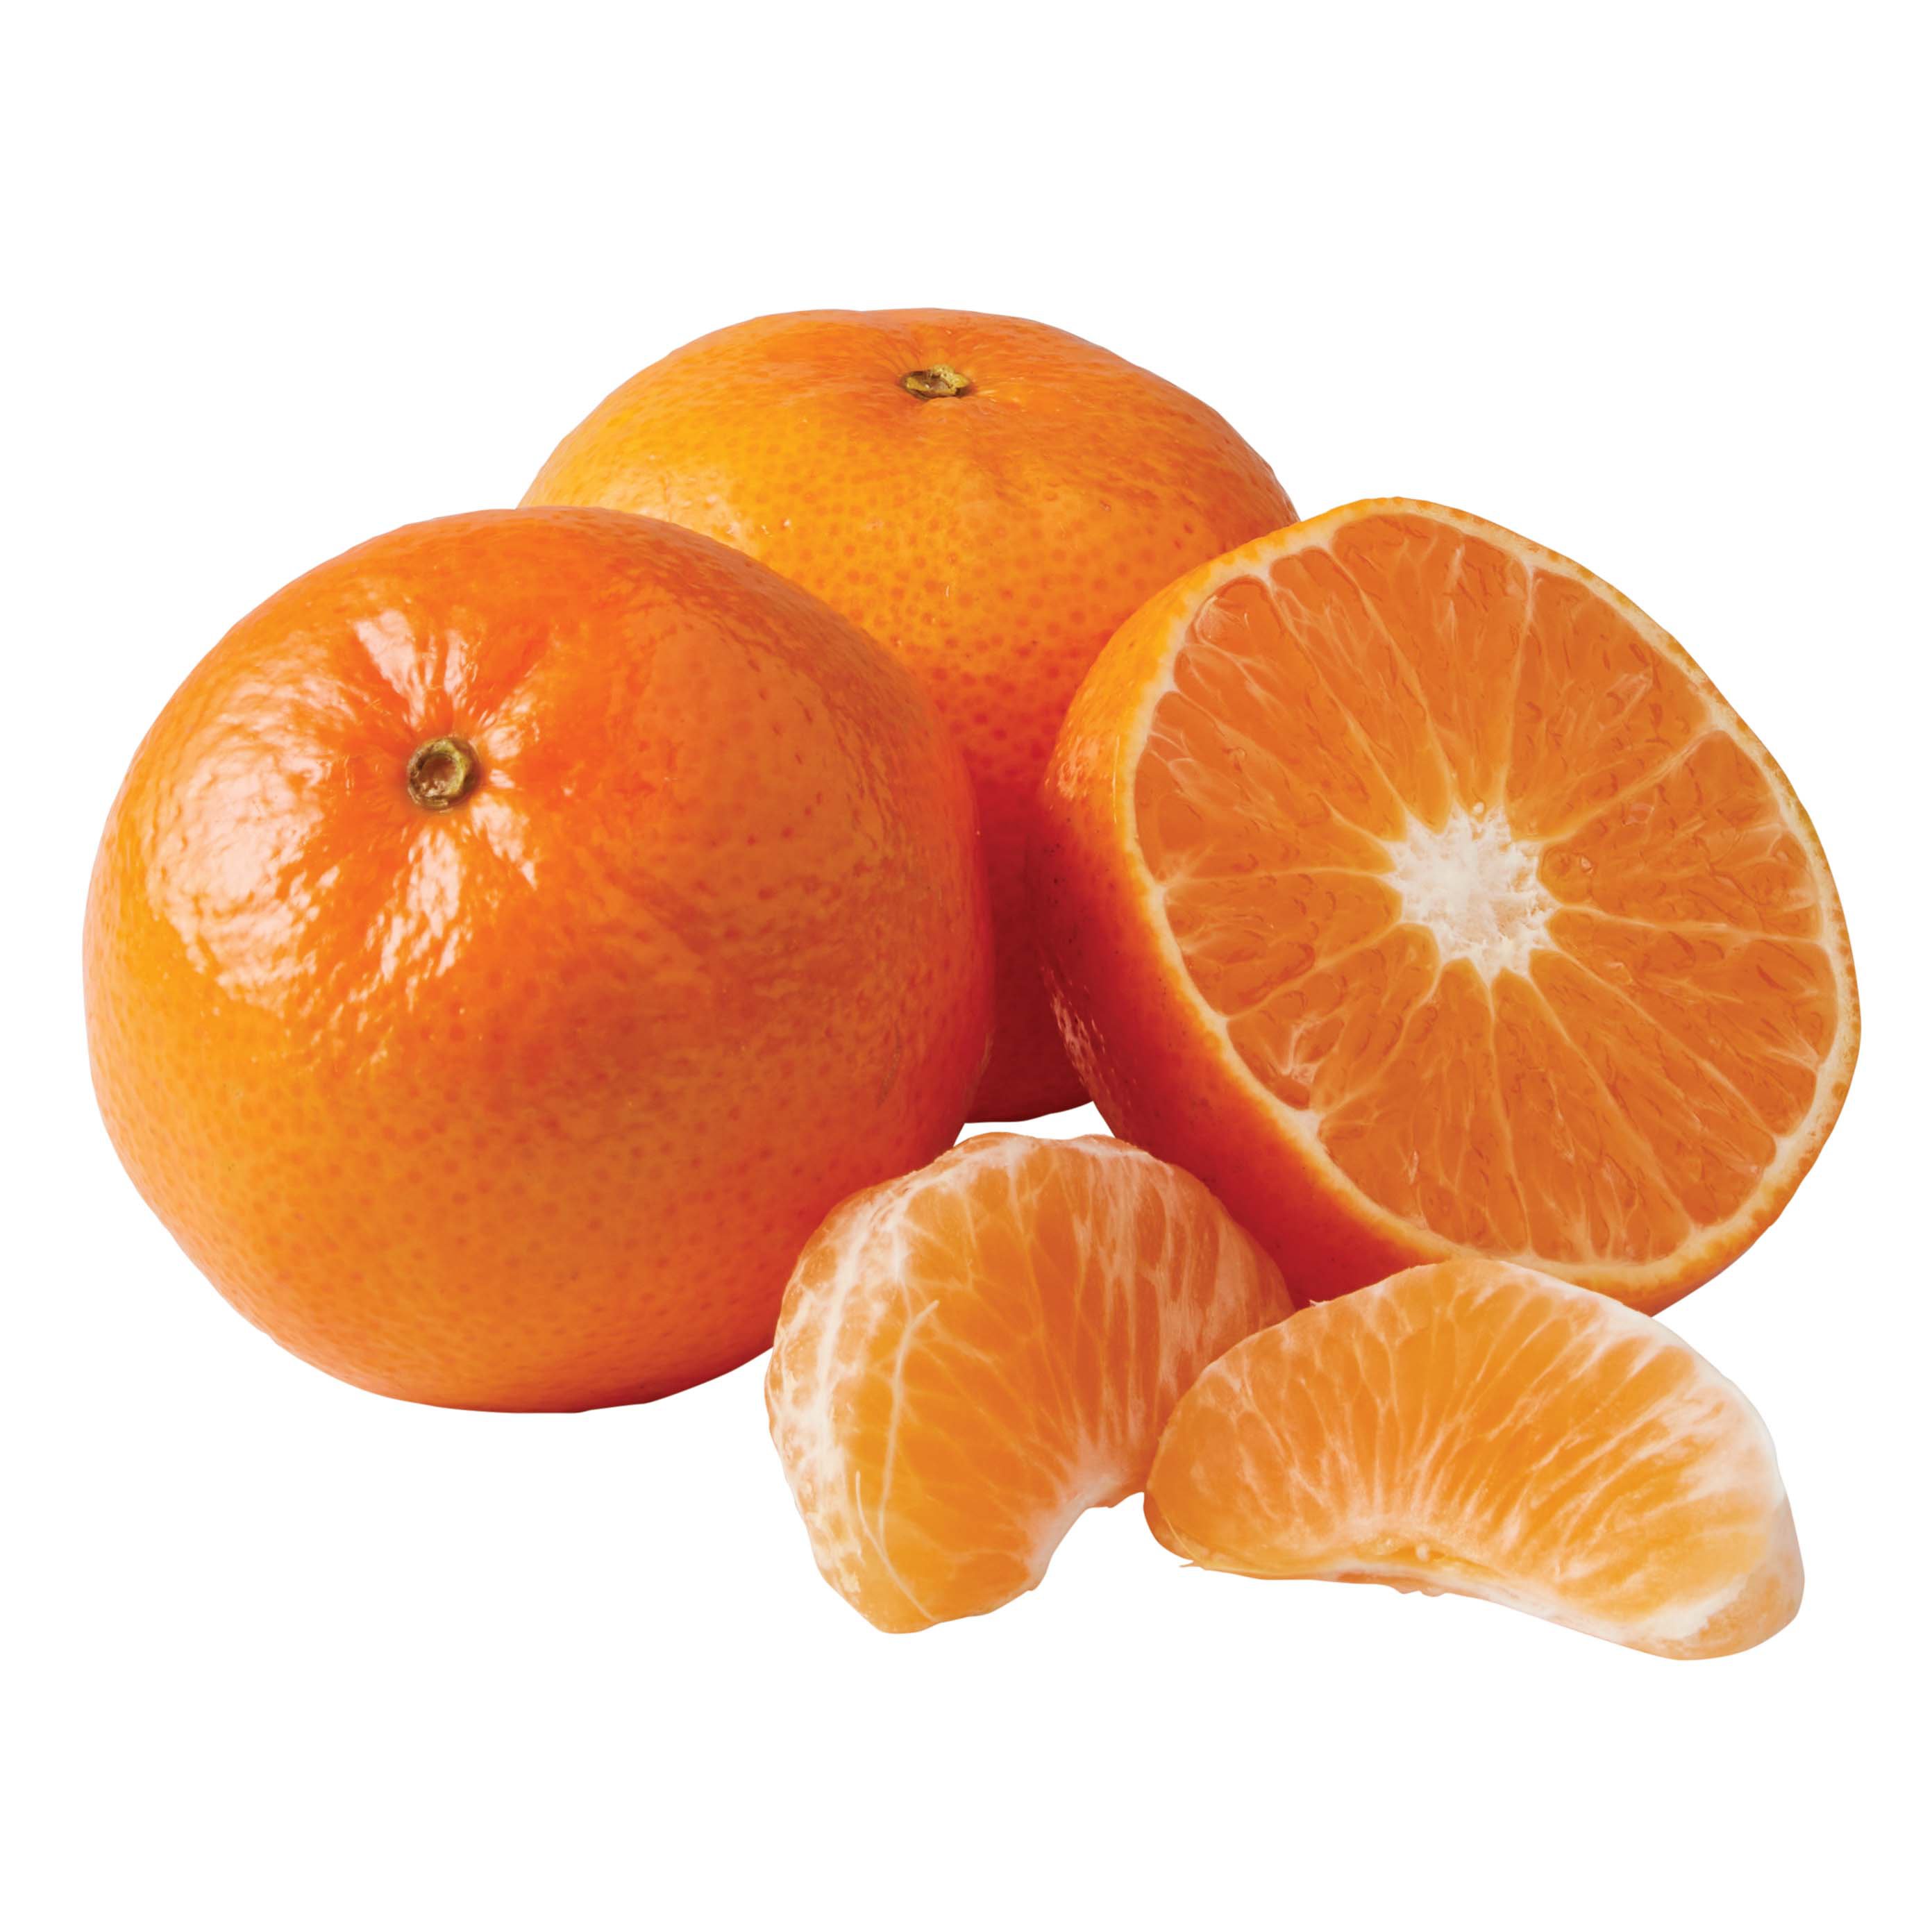 Fresh Juicy Crunch Tangerines Shop Fruit At H E B